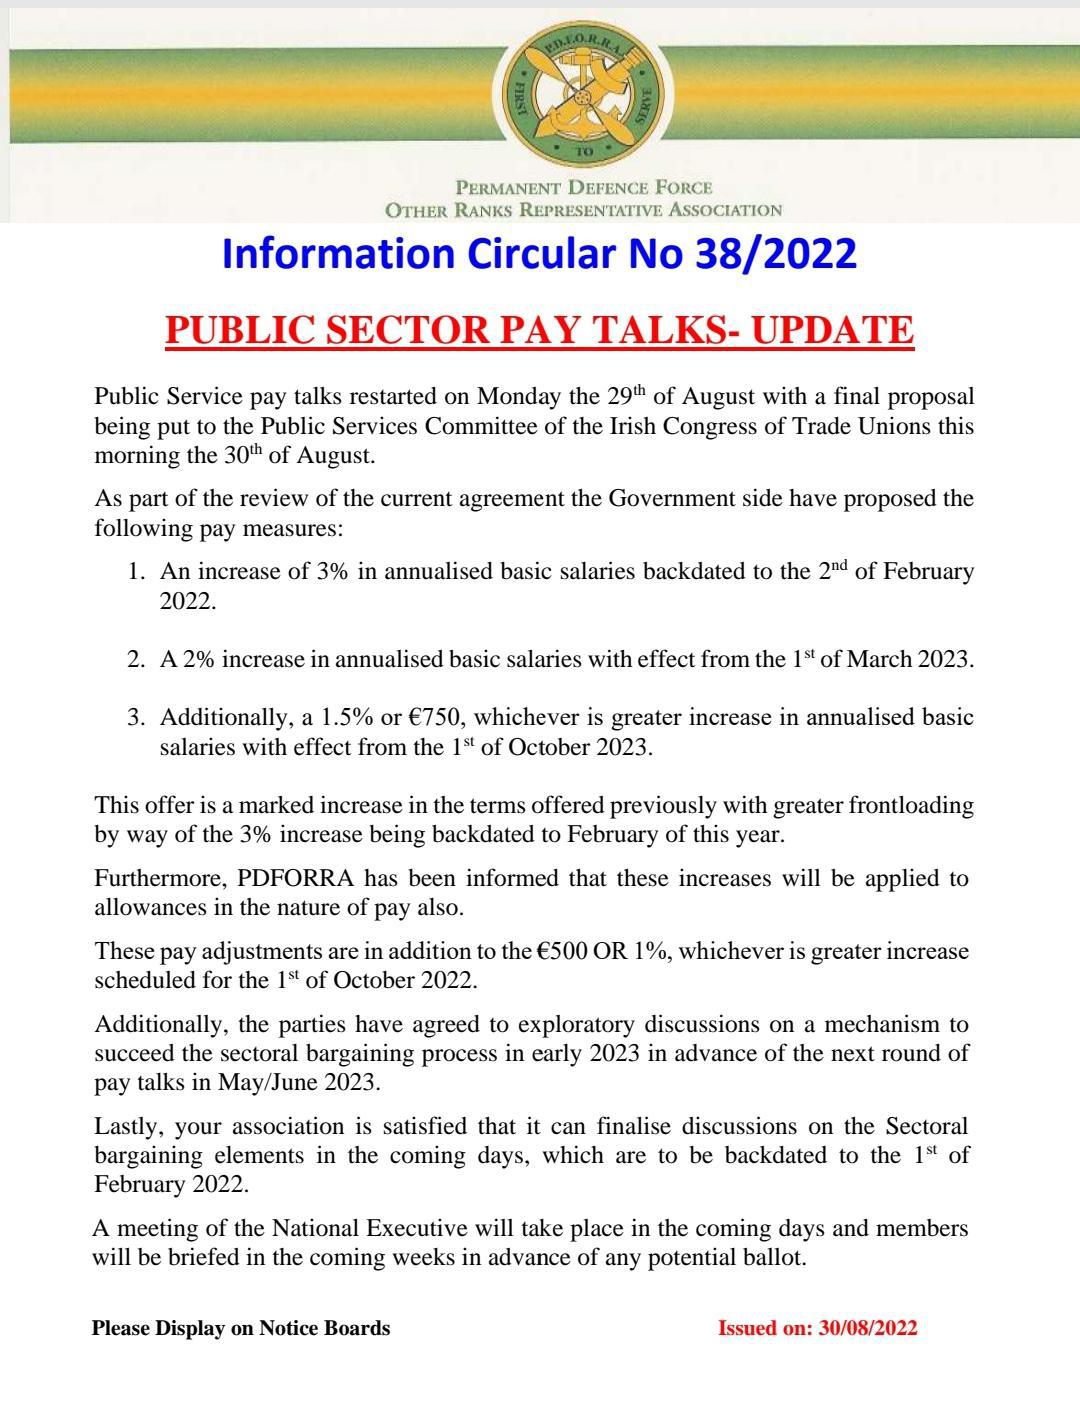 Information Circular No 38 of 22 - Public Sector Pay Talks